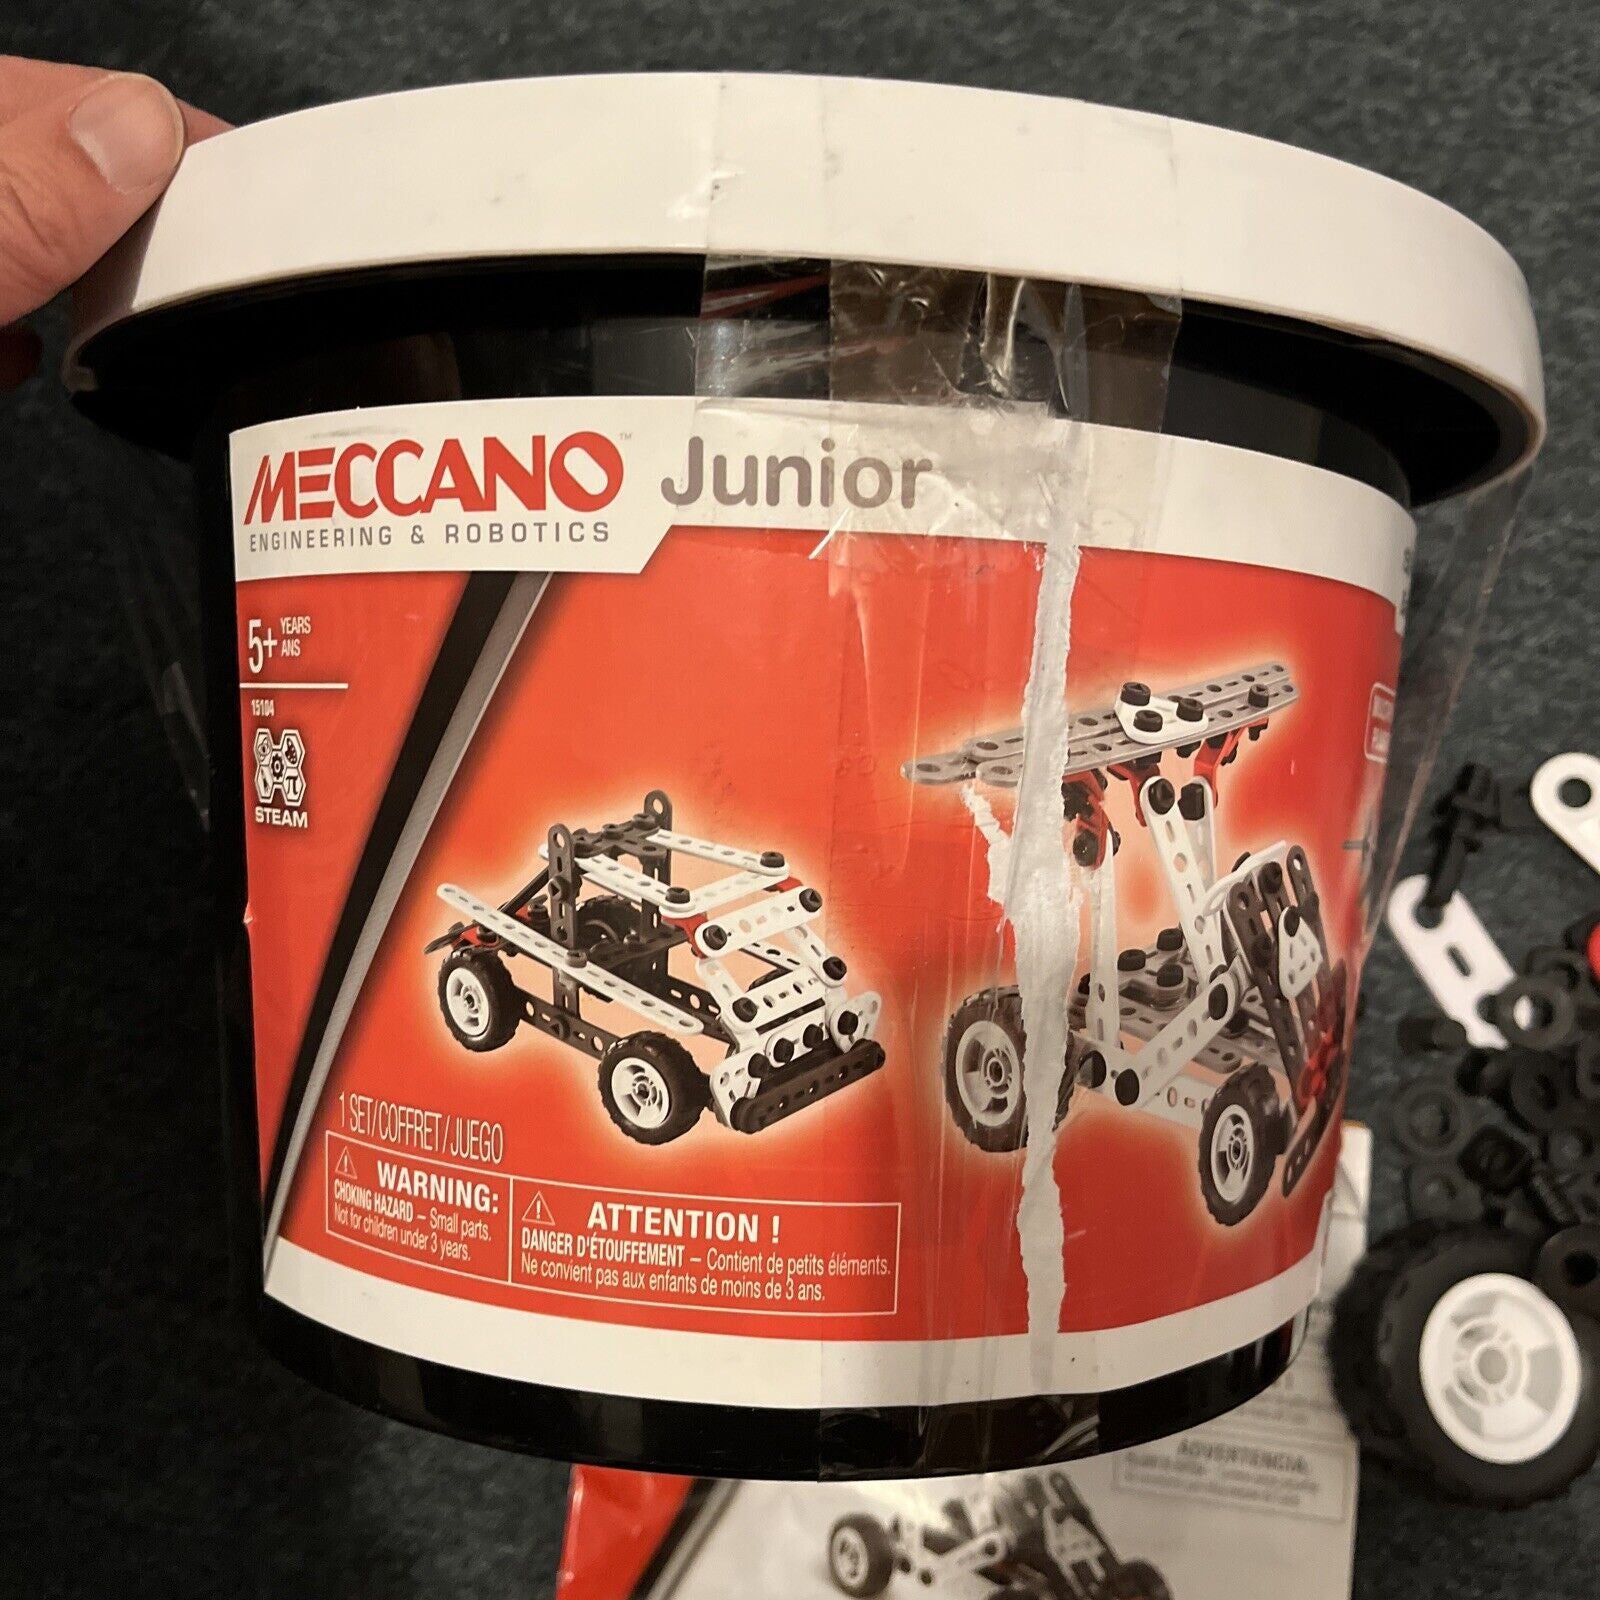 Meccano Junior, 150 pcs Bucket STEAM Model Building Kit for Open